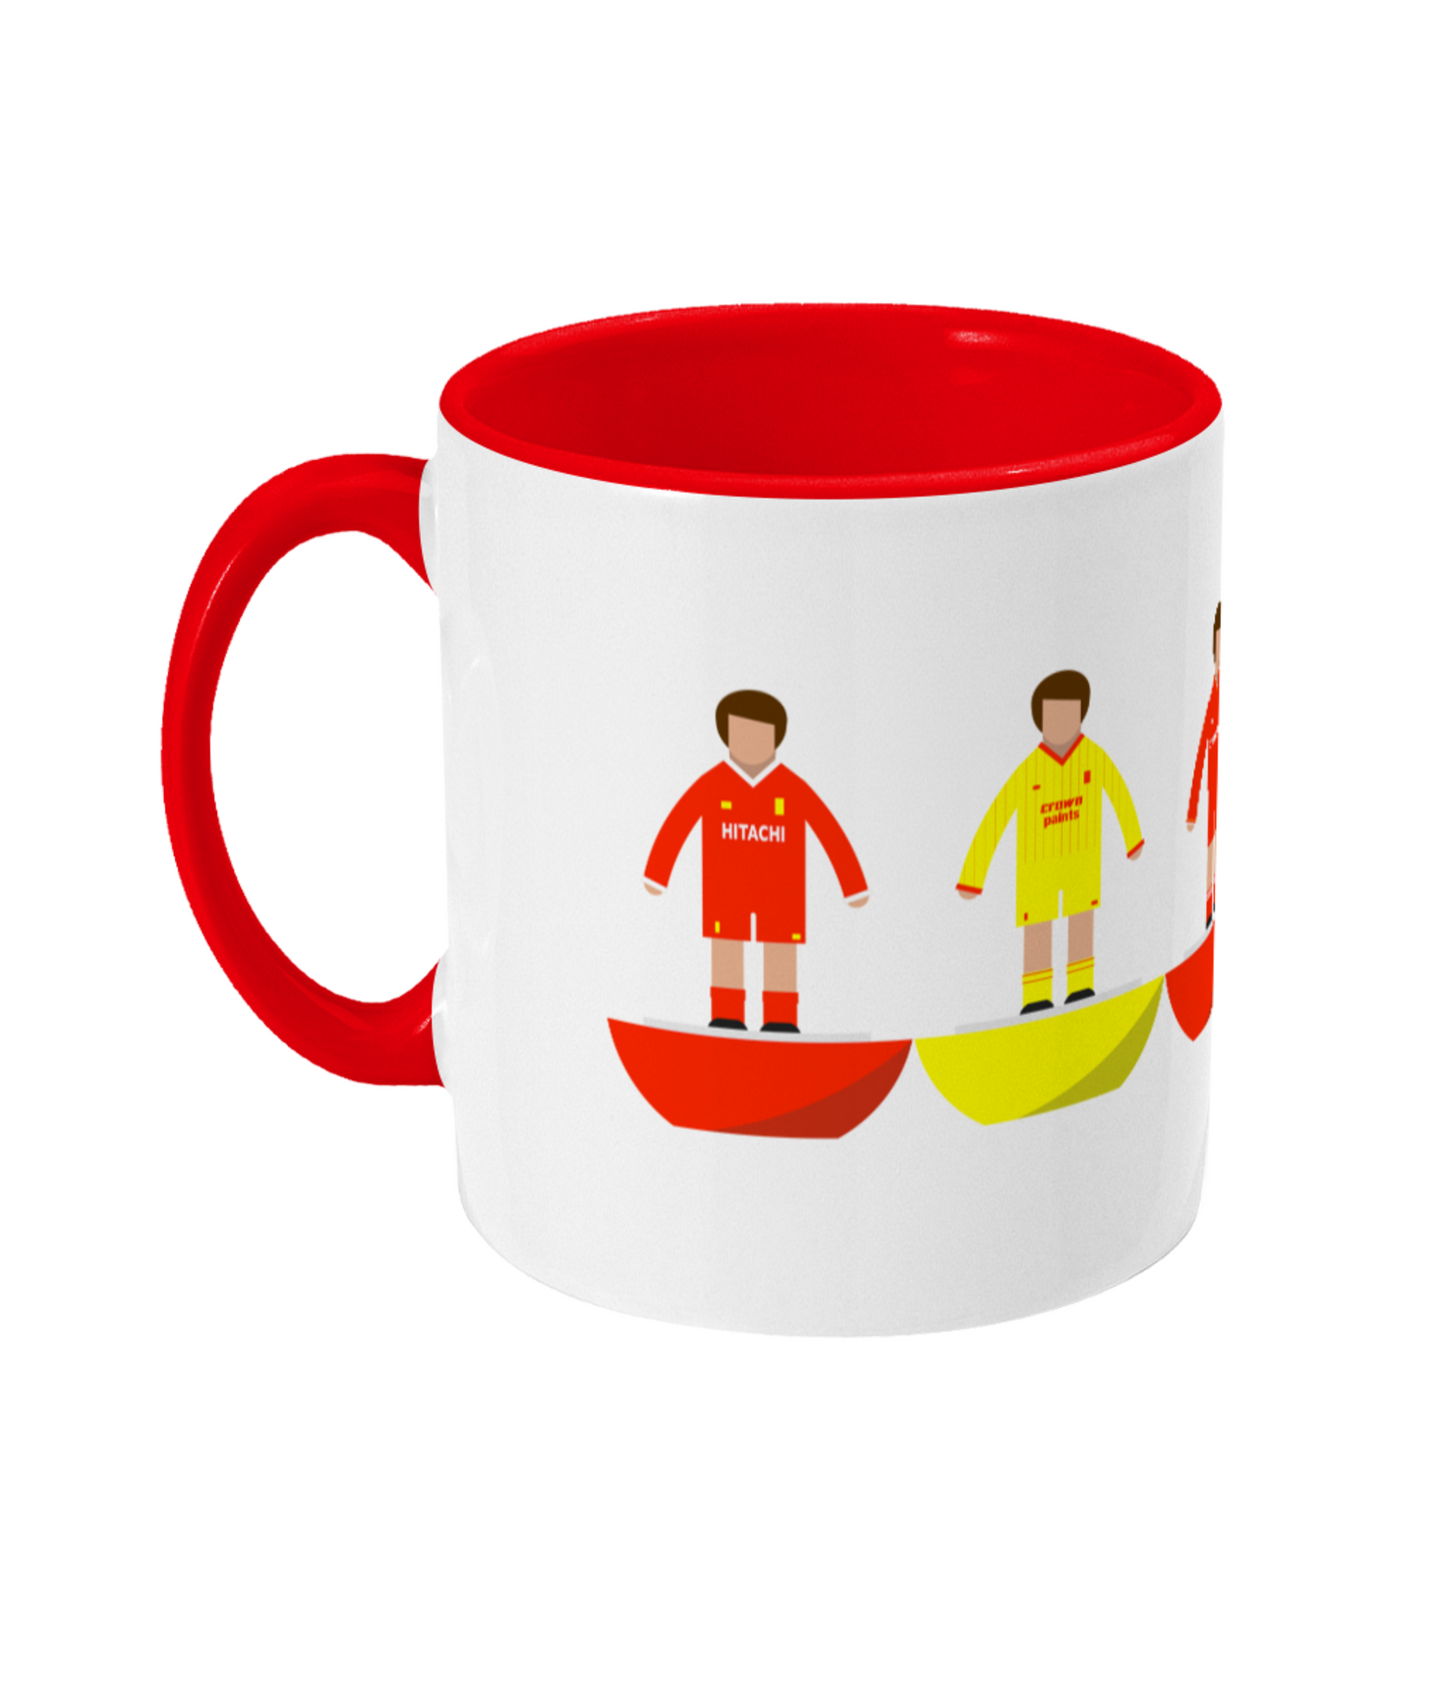 Football Kits 'Liverpool combined' Mug